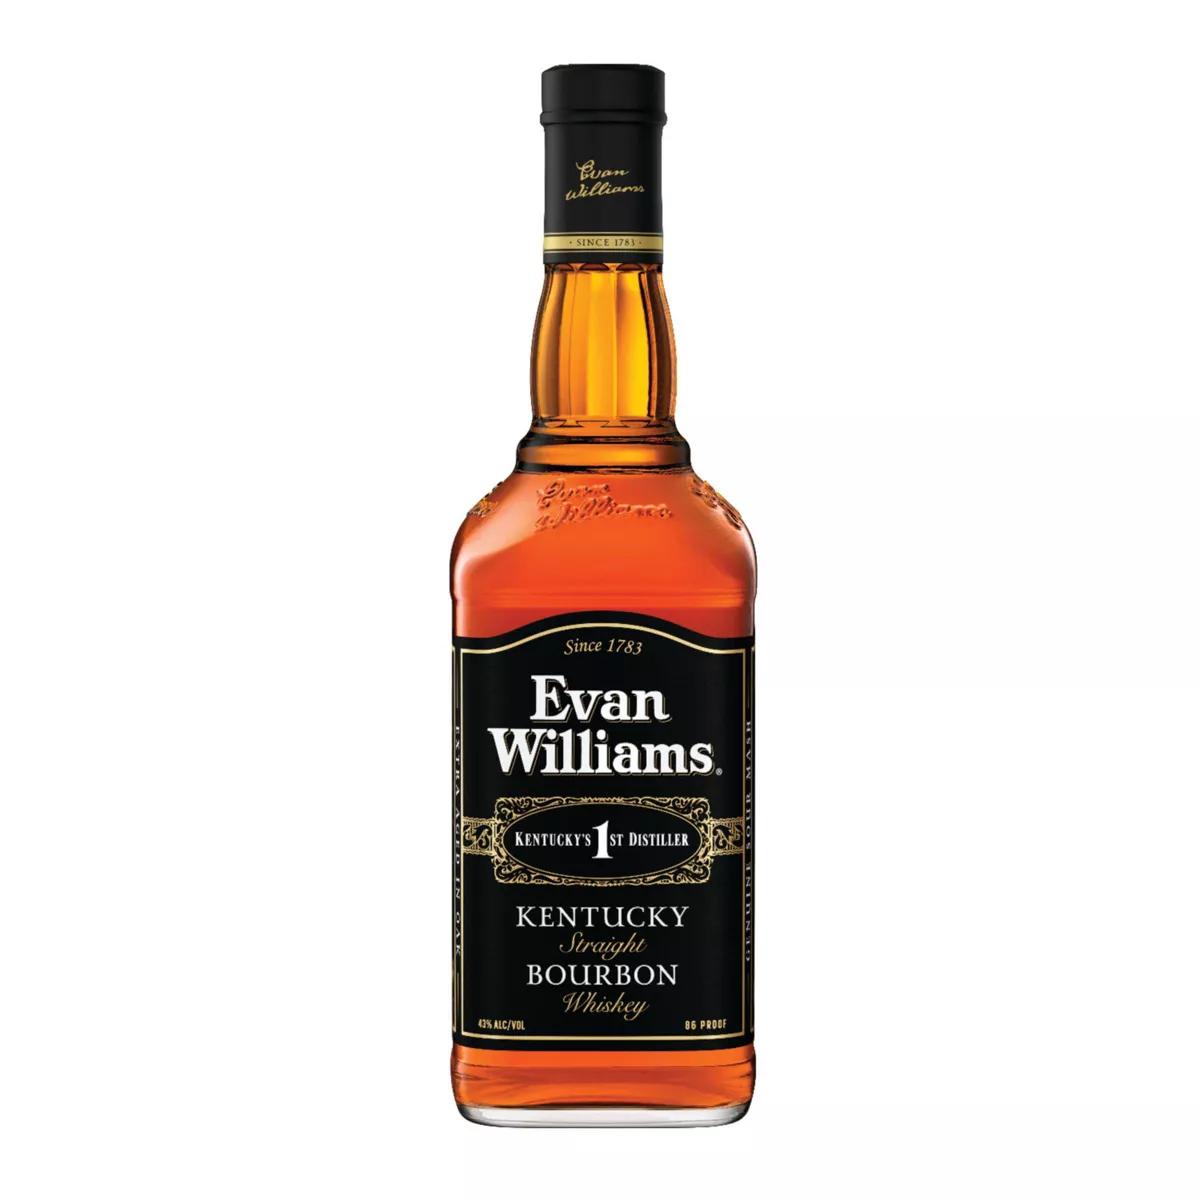 a bottle of evan williams kentucky bourbon